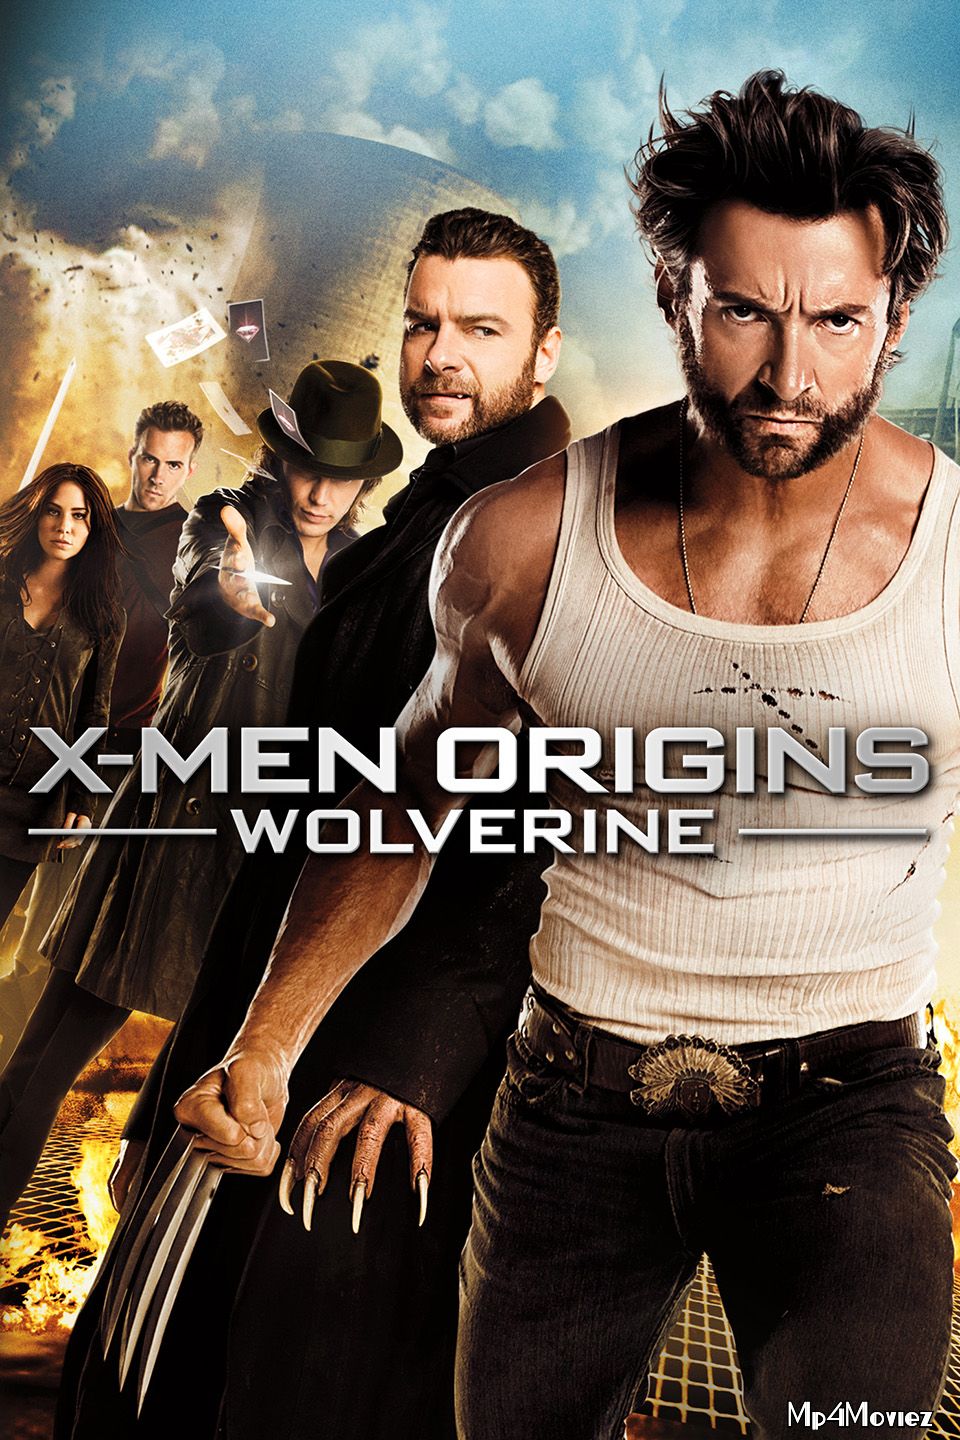 X-Men Origins Wolverine 2009 Hindi Dubbed Full Movie download full movie